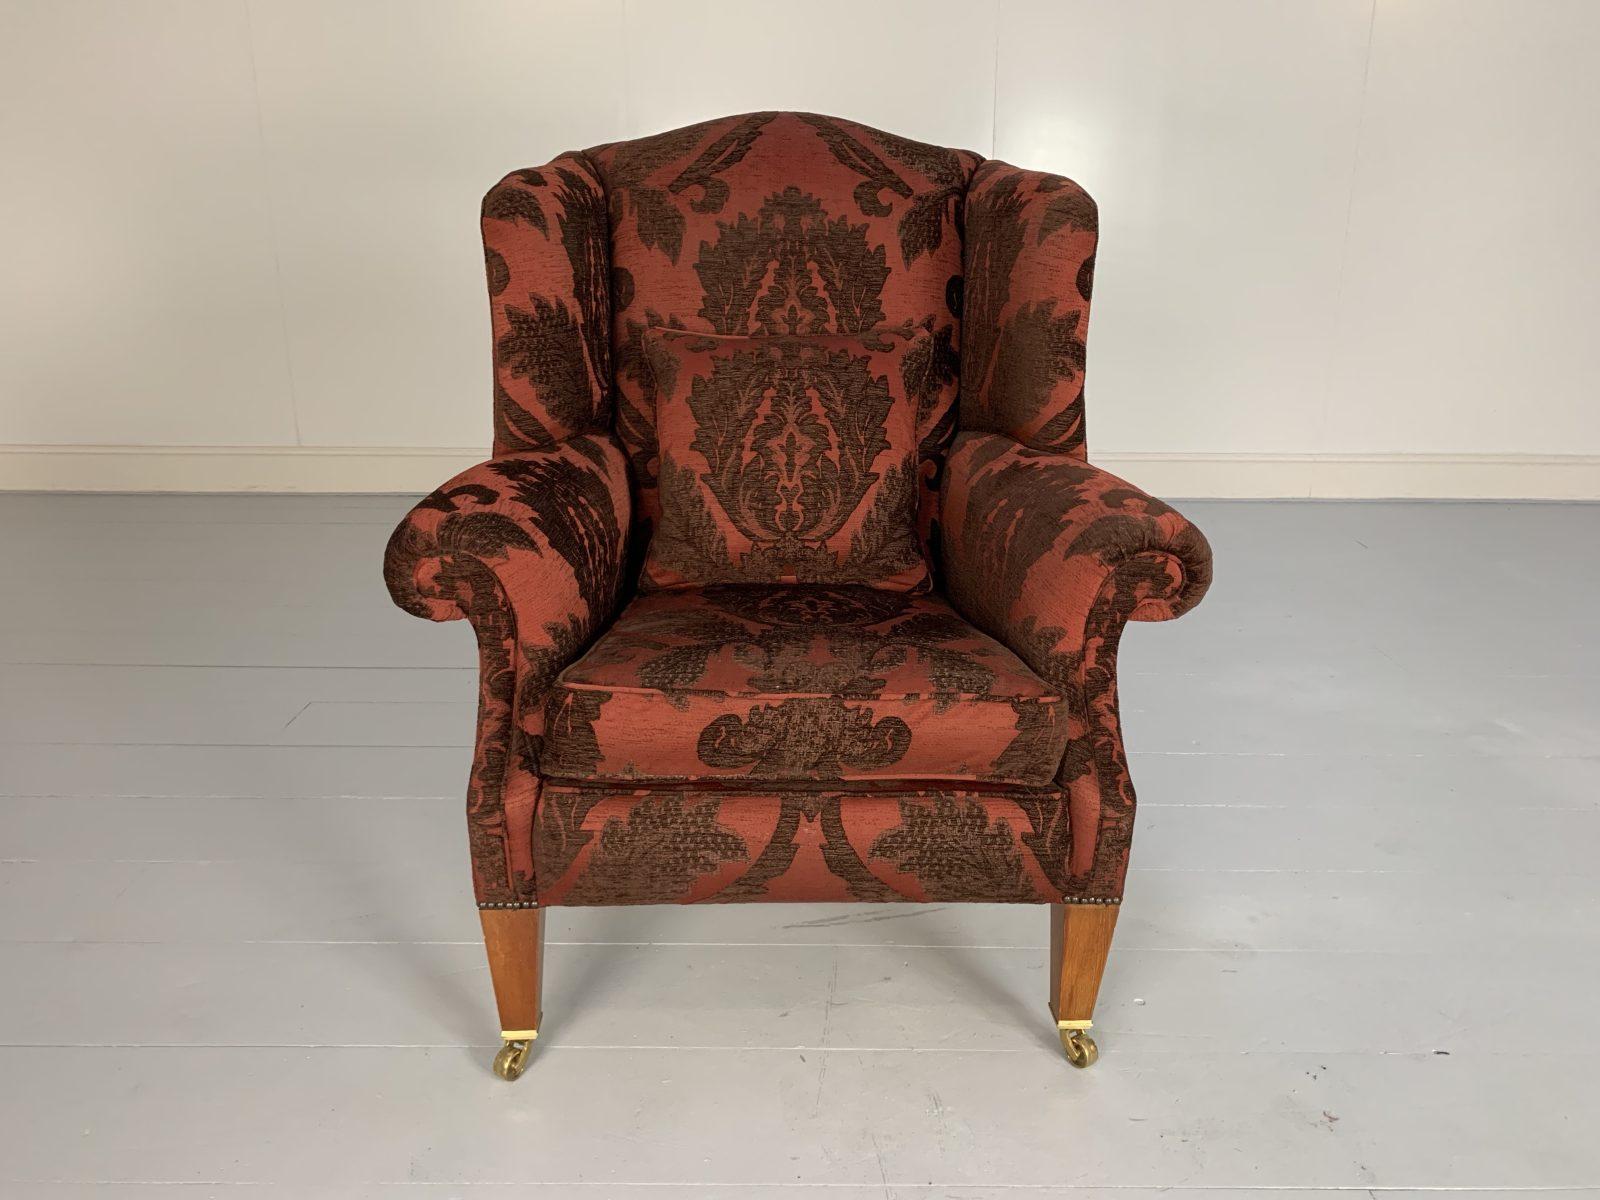 Duresta “Trafalgar” Sofa & “Devonshire” Armchair, in Deep Red Damask For Sale 8